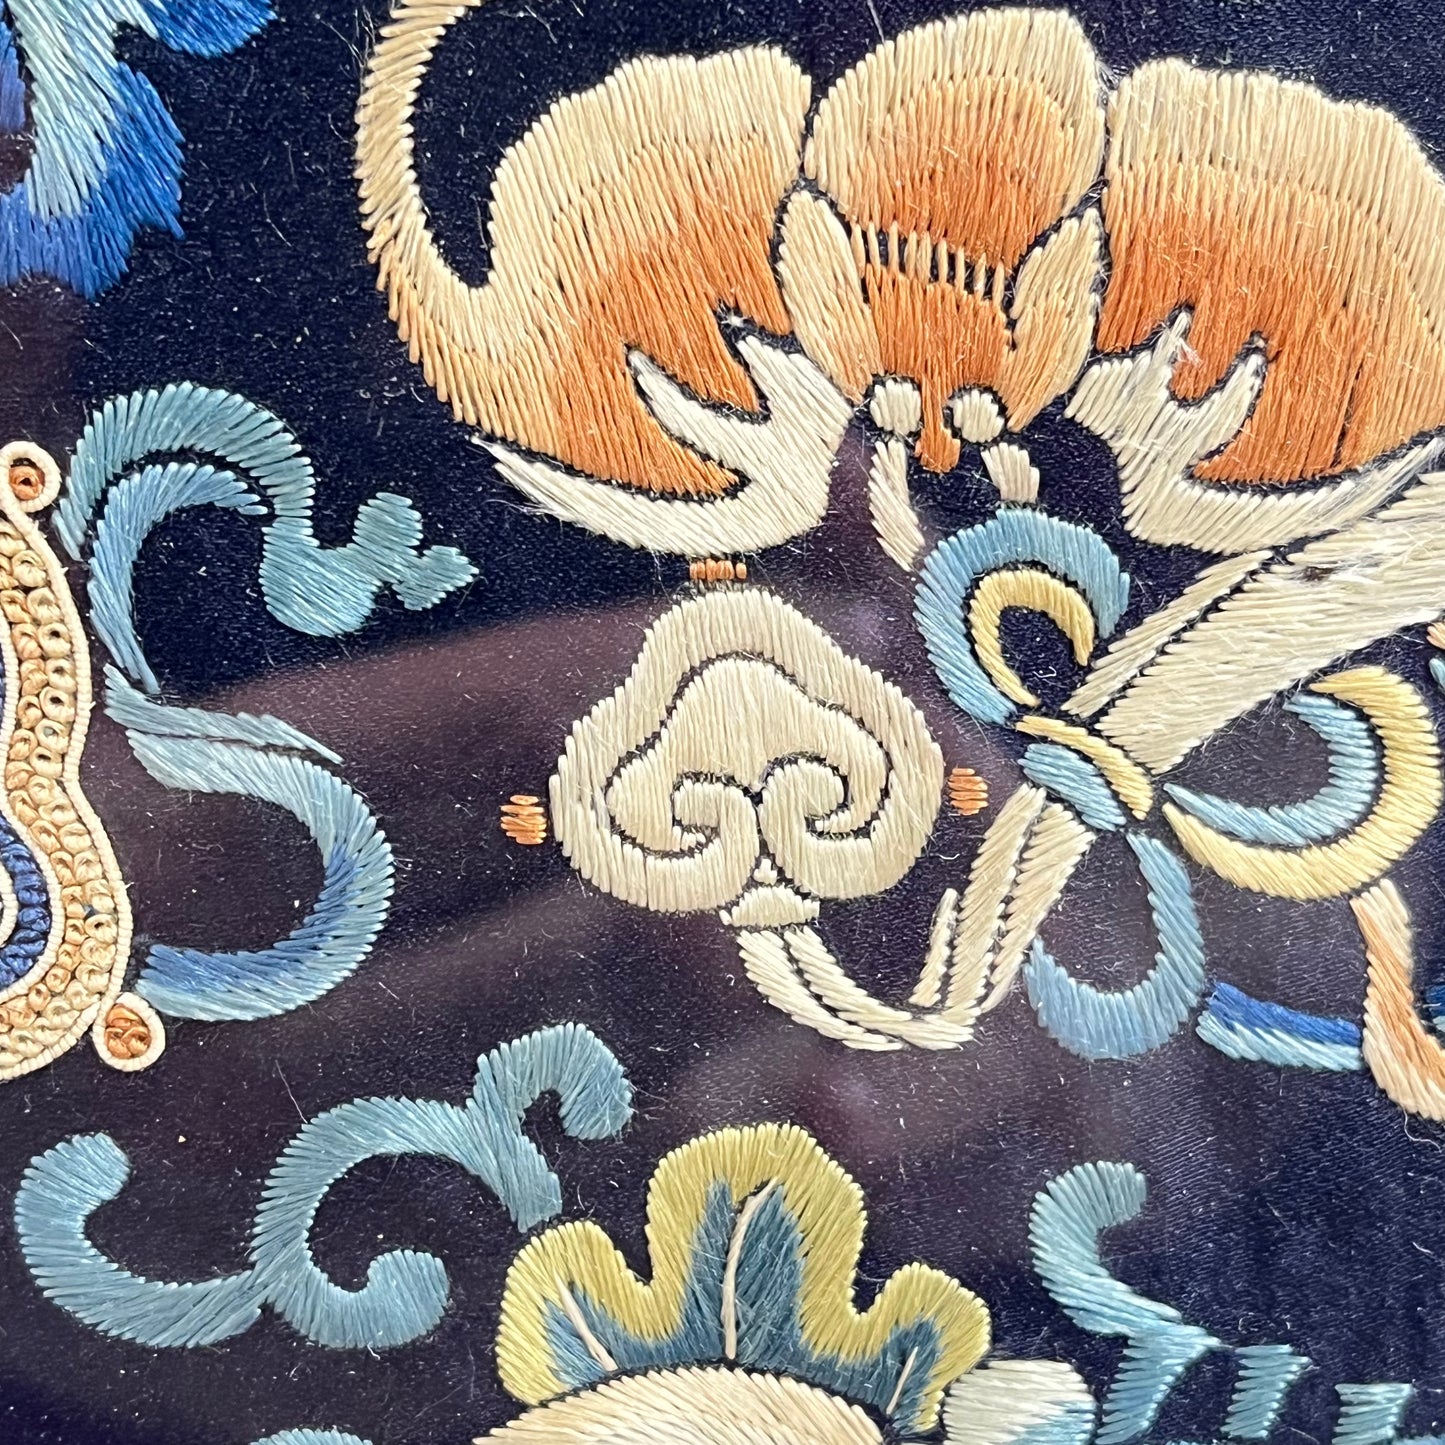 Framed Chinese Silk Blue Emboidery Wedding Roundel 23"